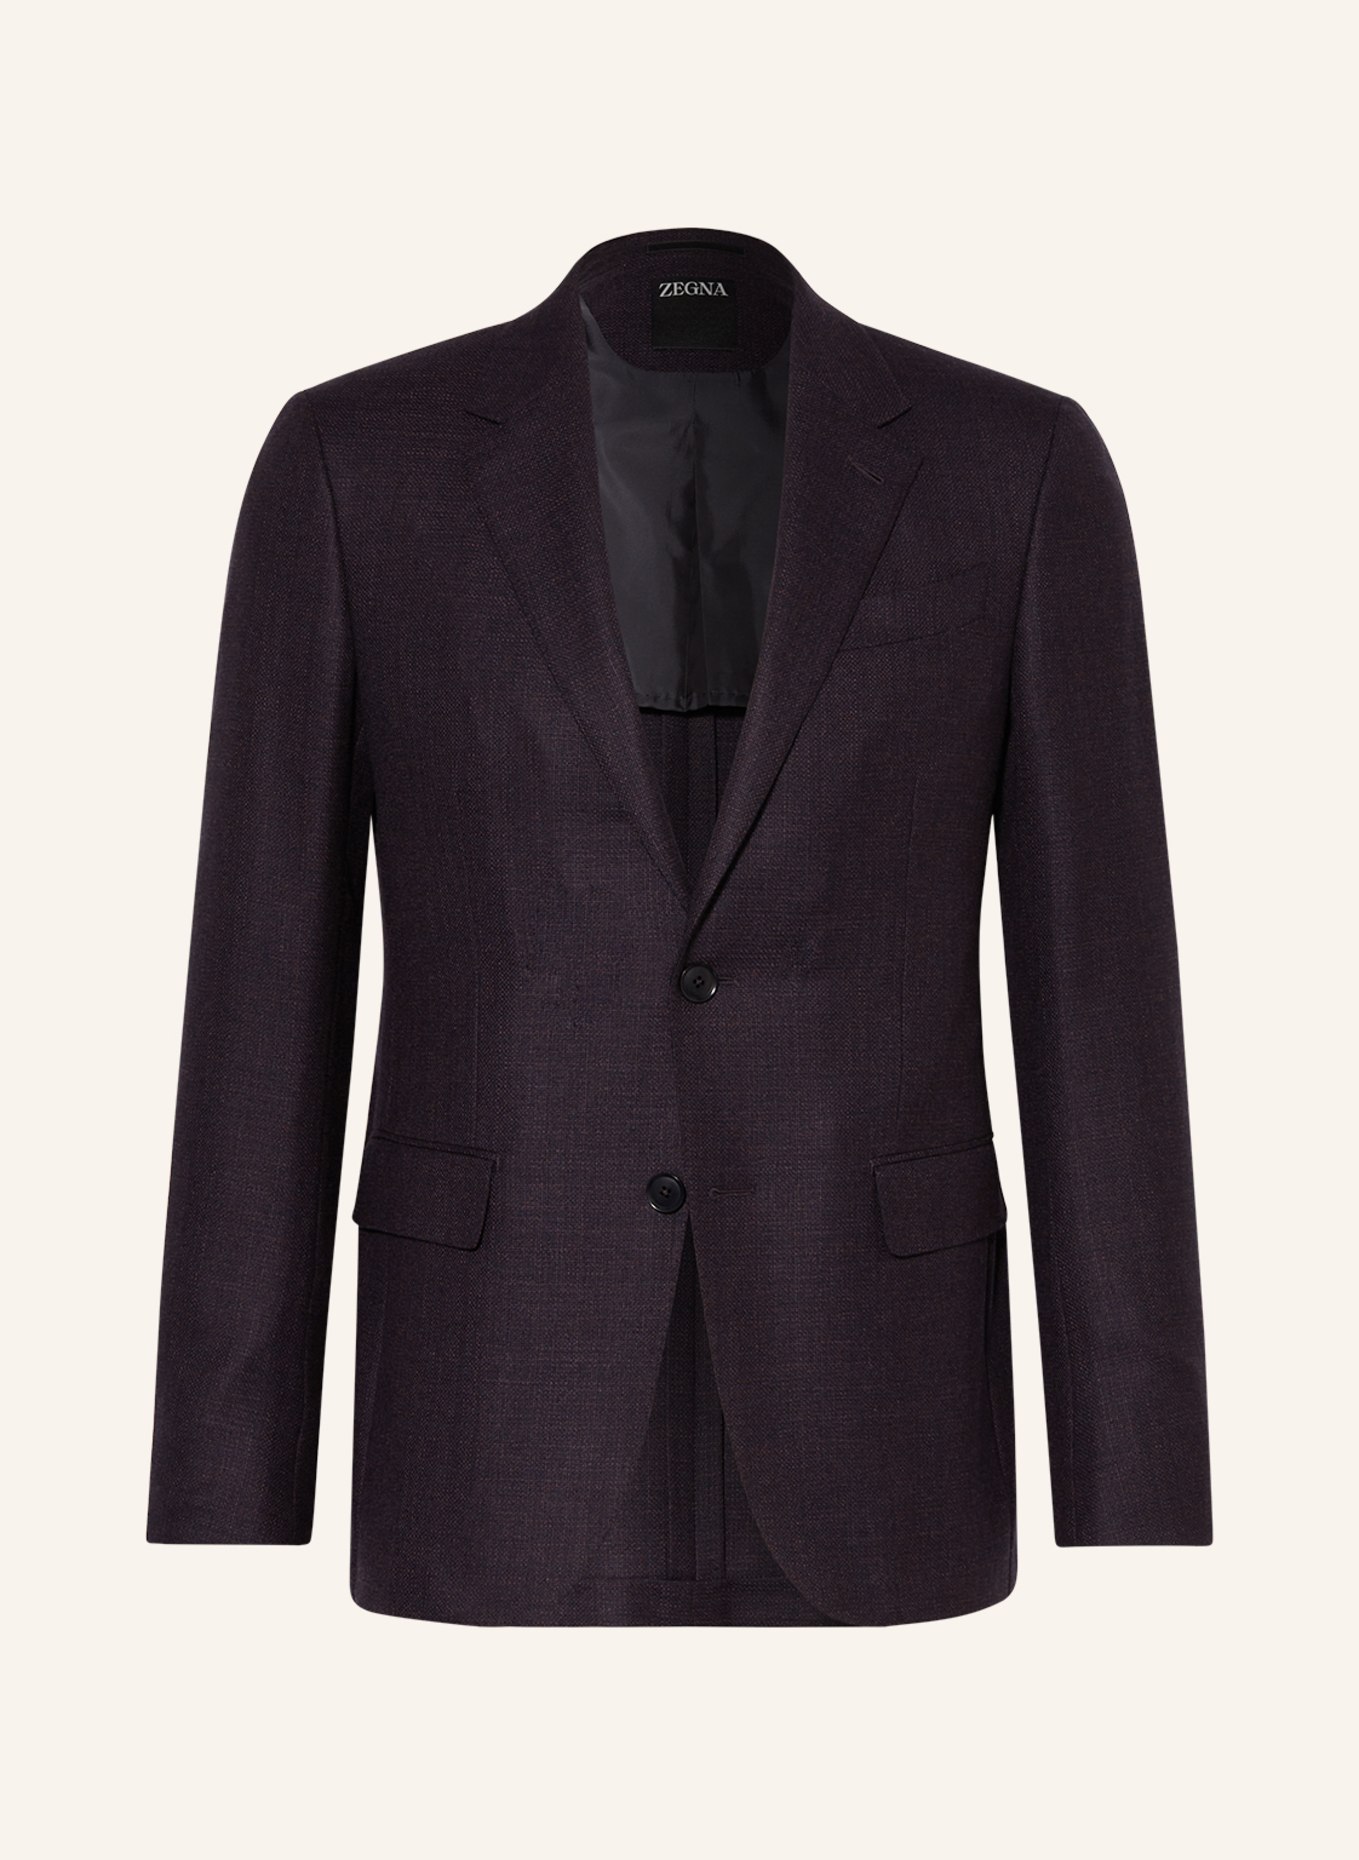 ZEGNA Tailored jacket extra slim fit, Color: BORDEAUX (Image 1)